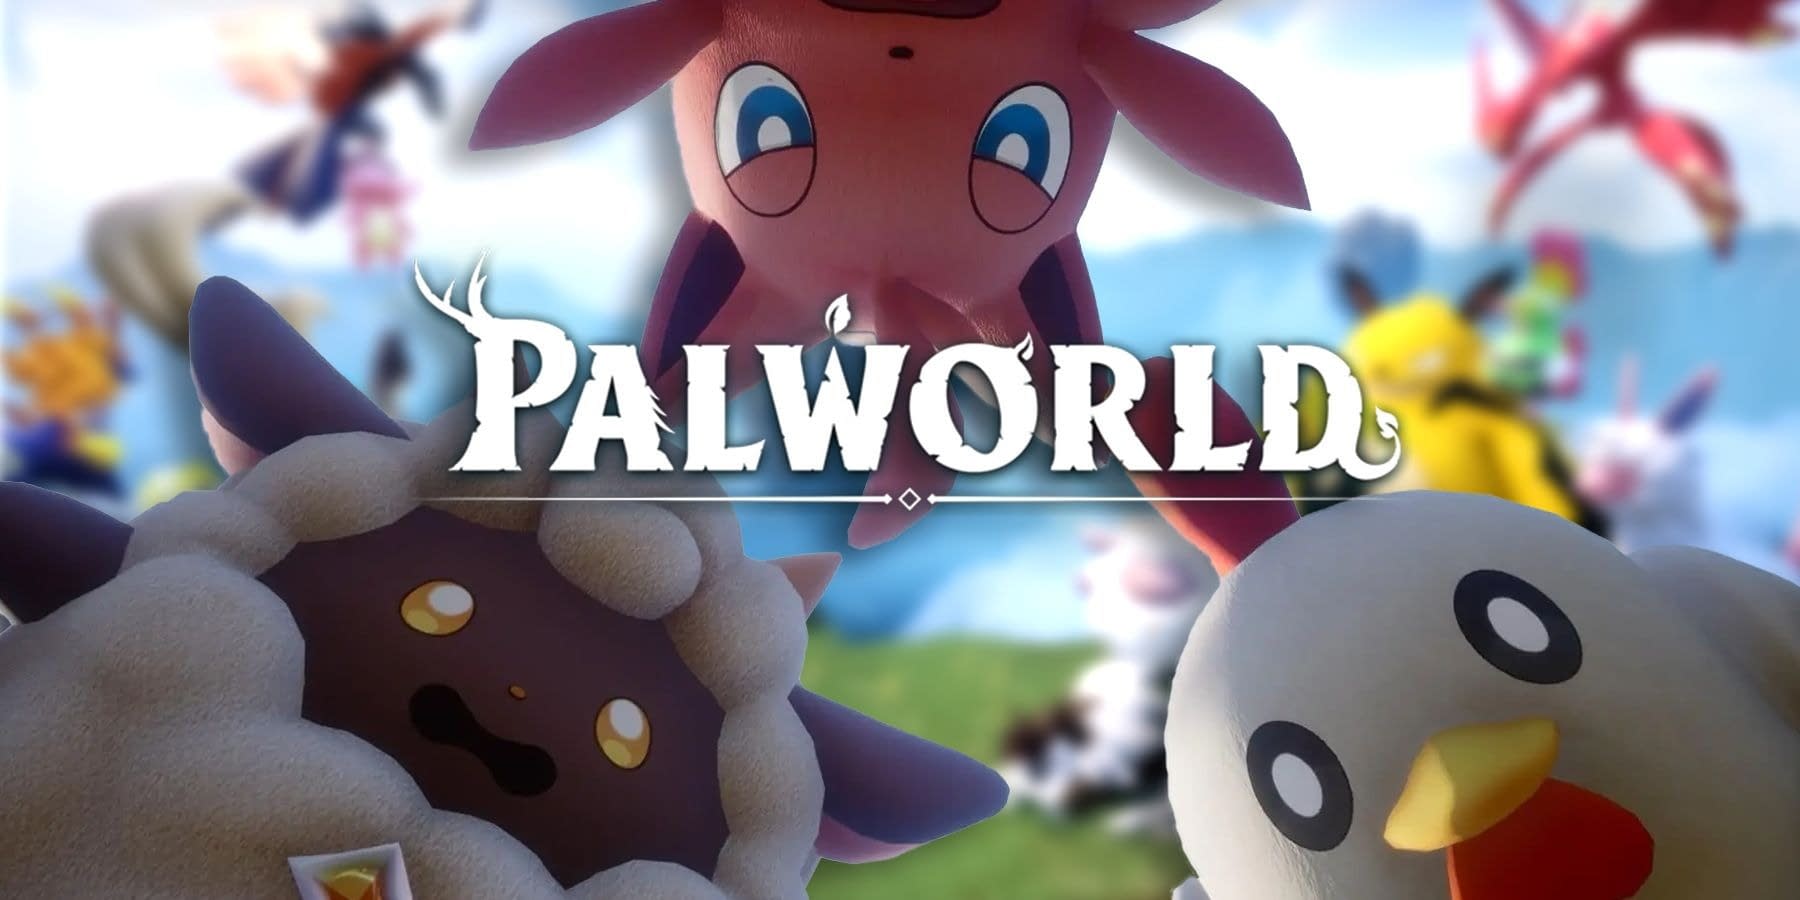 Palworld Players lost 97 percent!